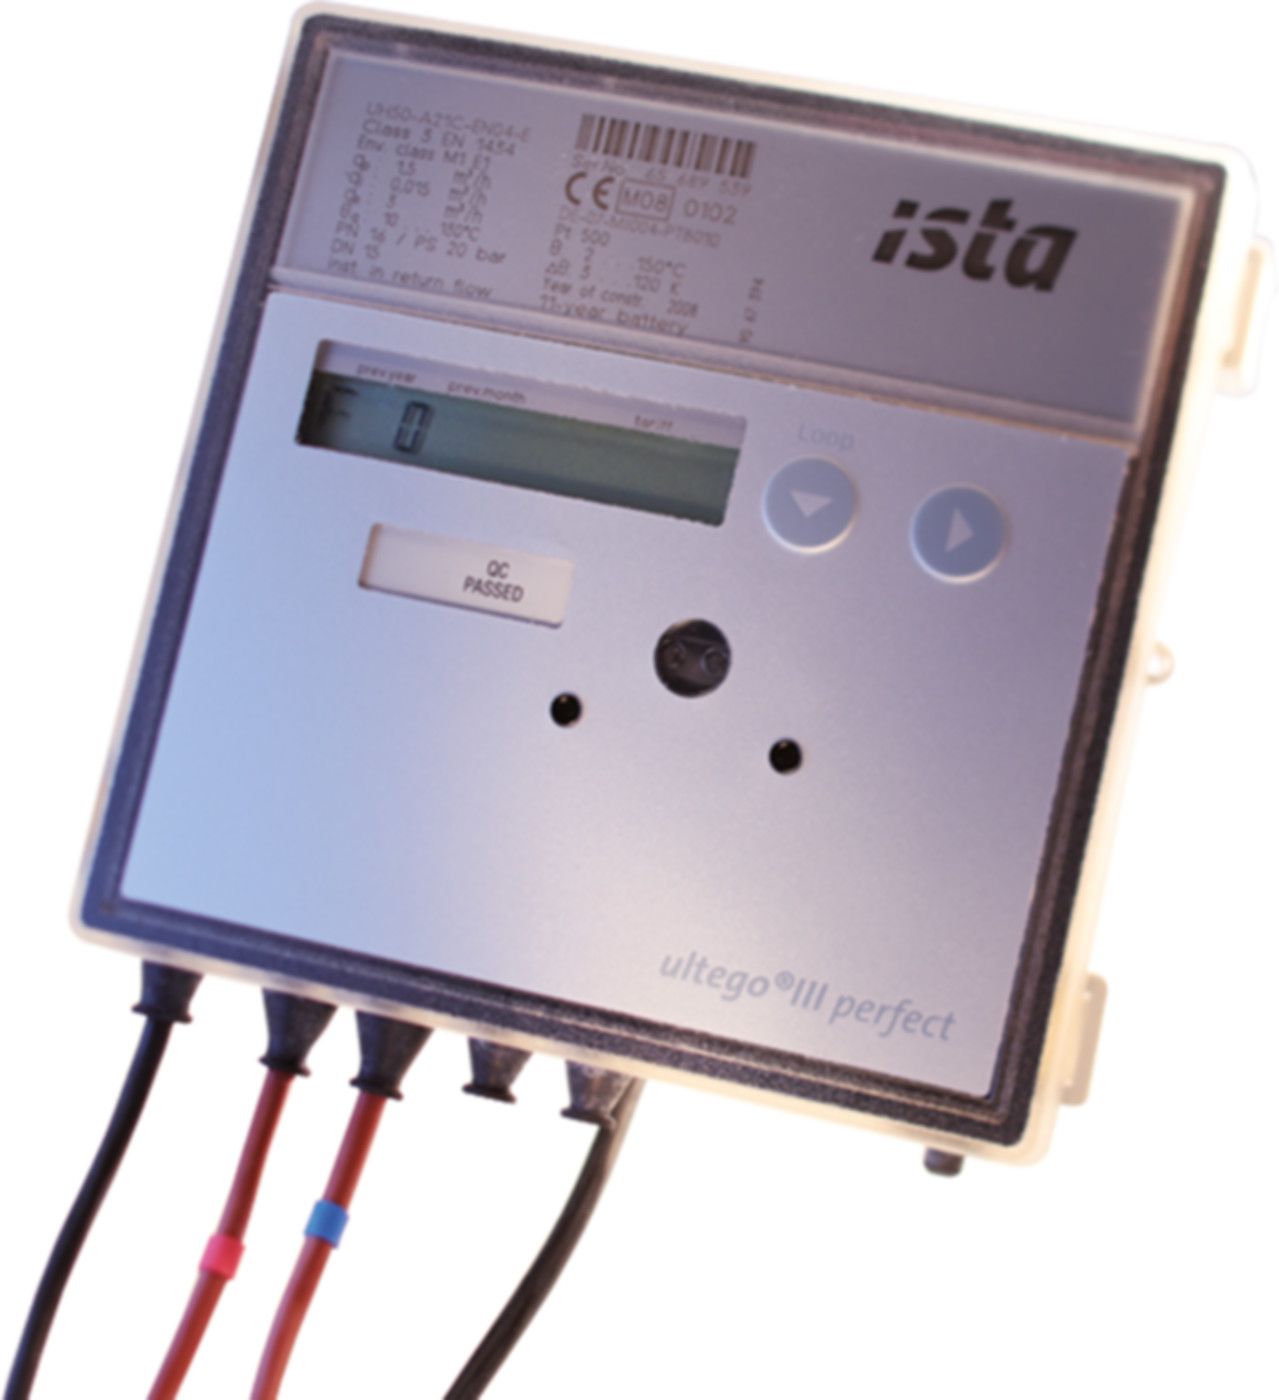 Ultraschall Wärmezähler ultego III perf. 25.0 m3/h DN 65 L=300 mm Batterie - ISTA - Wärme- / Wasserzähler